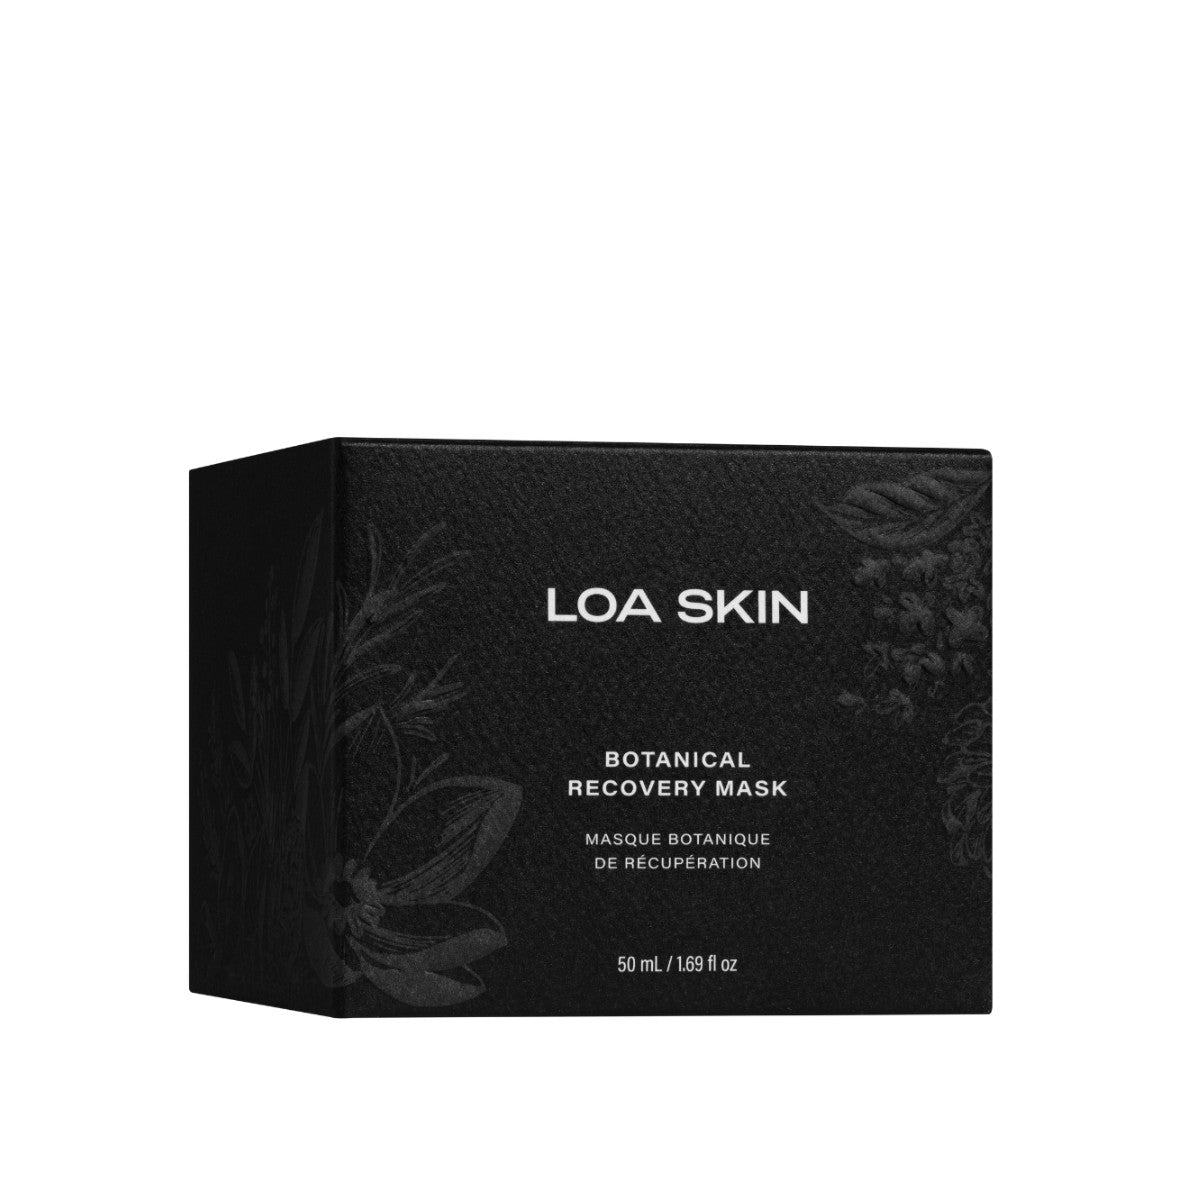 LOA Skin Botanical Recovery Mask